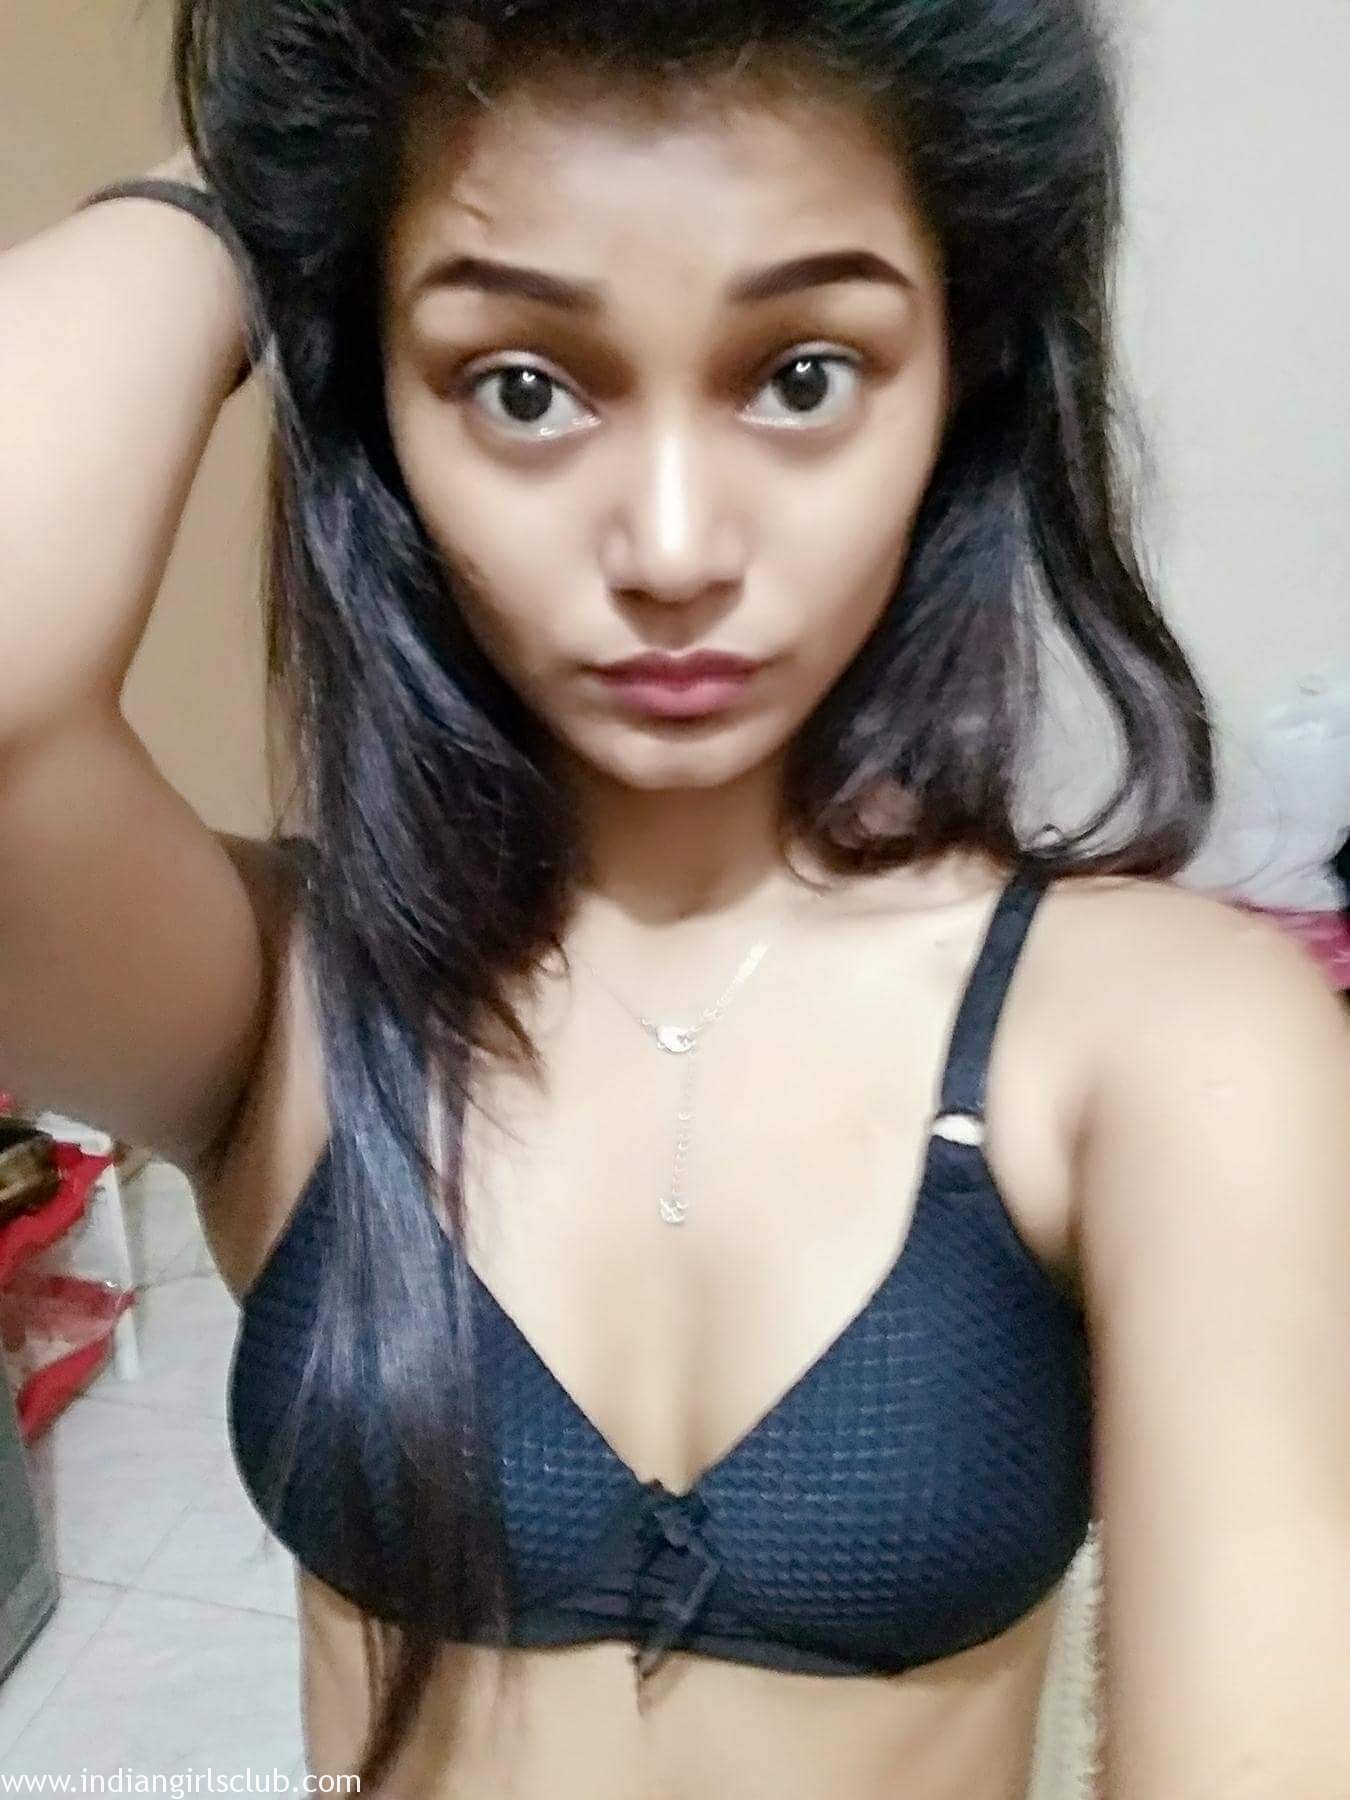 juicy_indian_teen_homemade_porn_19 - Indian Girls Club photo